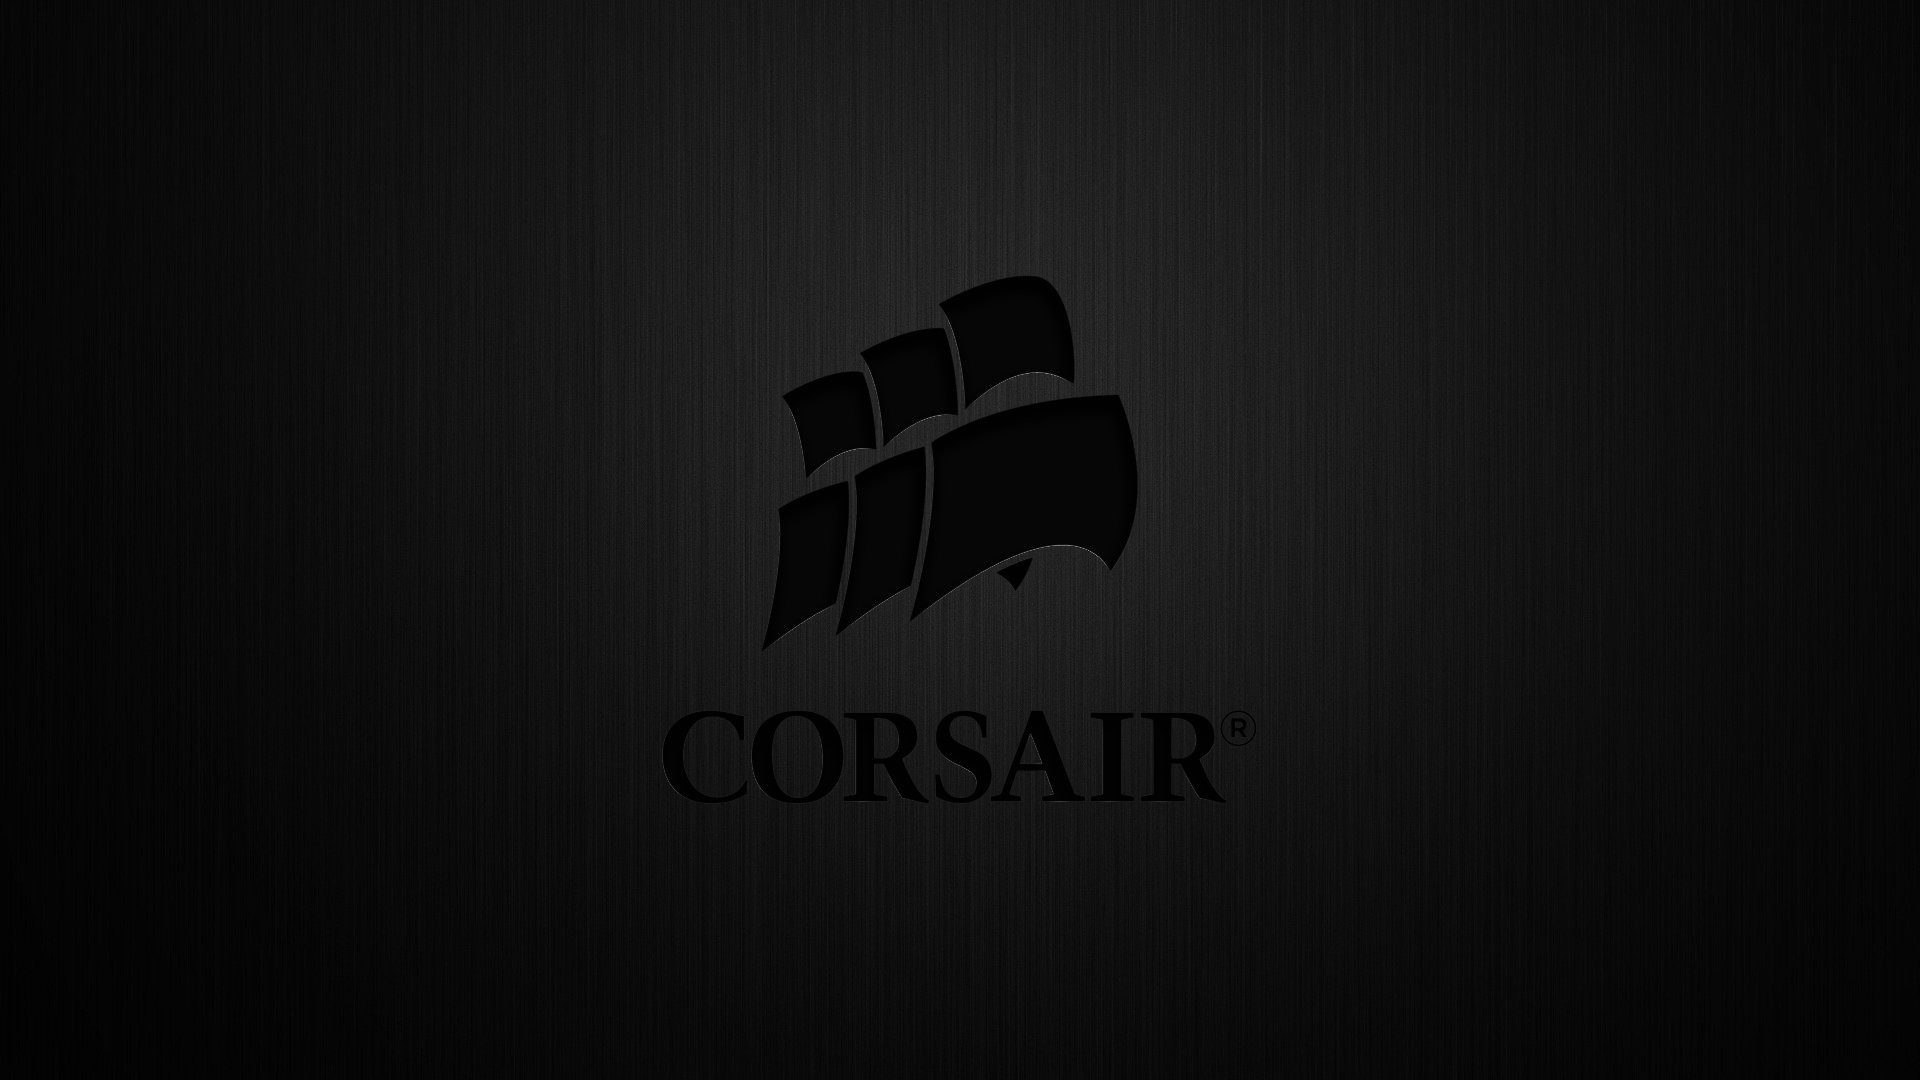 CORSAIR Gaming computer wallpaper | | 401317 | WallpaperUP